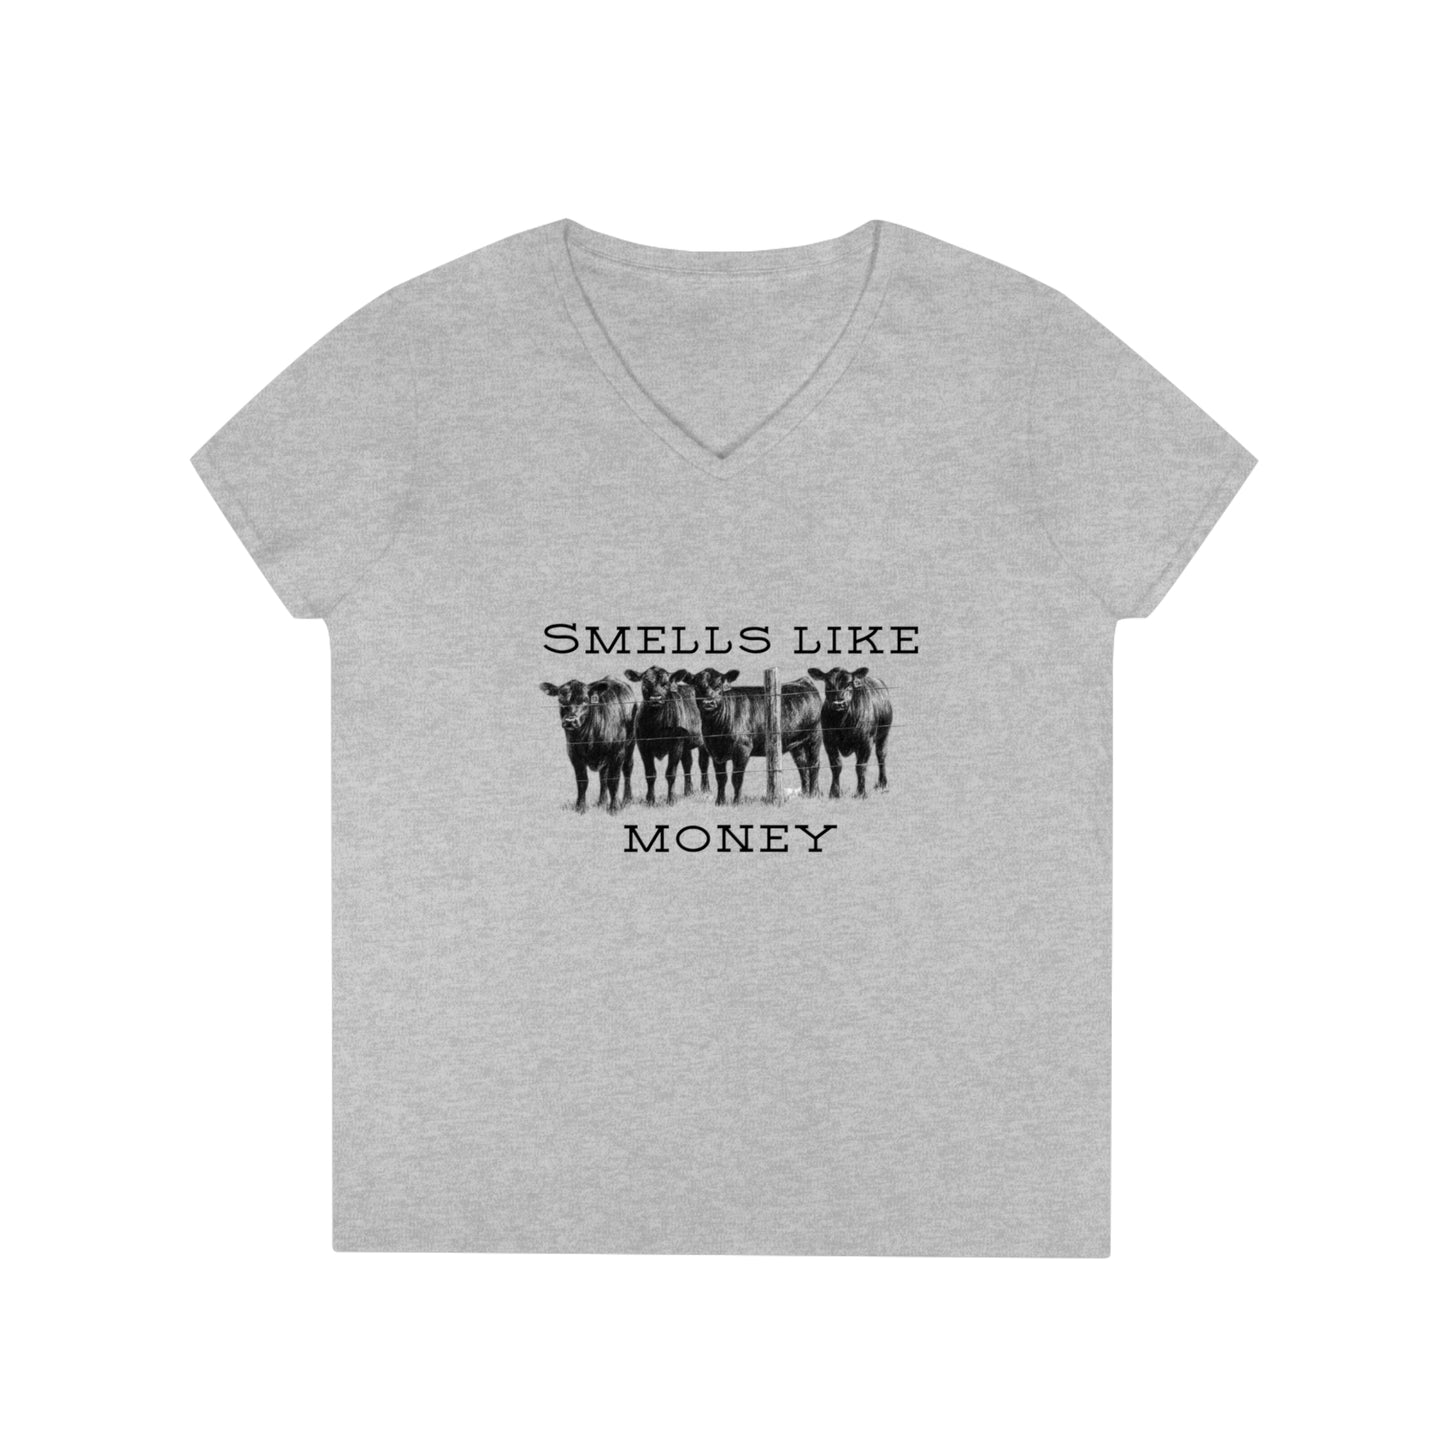 "Smells Like Money" Ladies' V-Neck T-Shirt